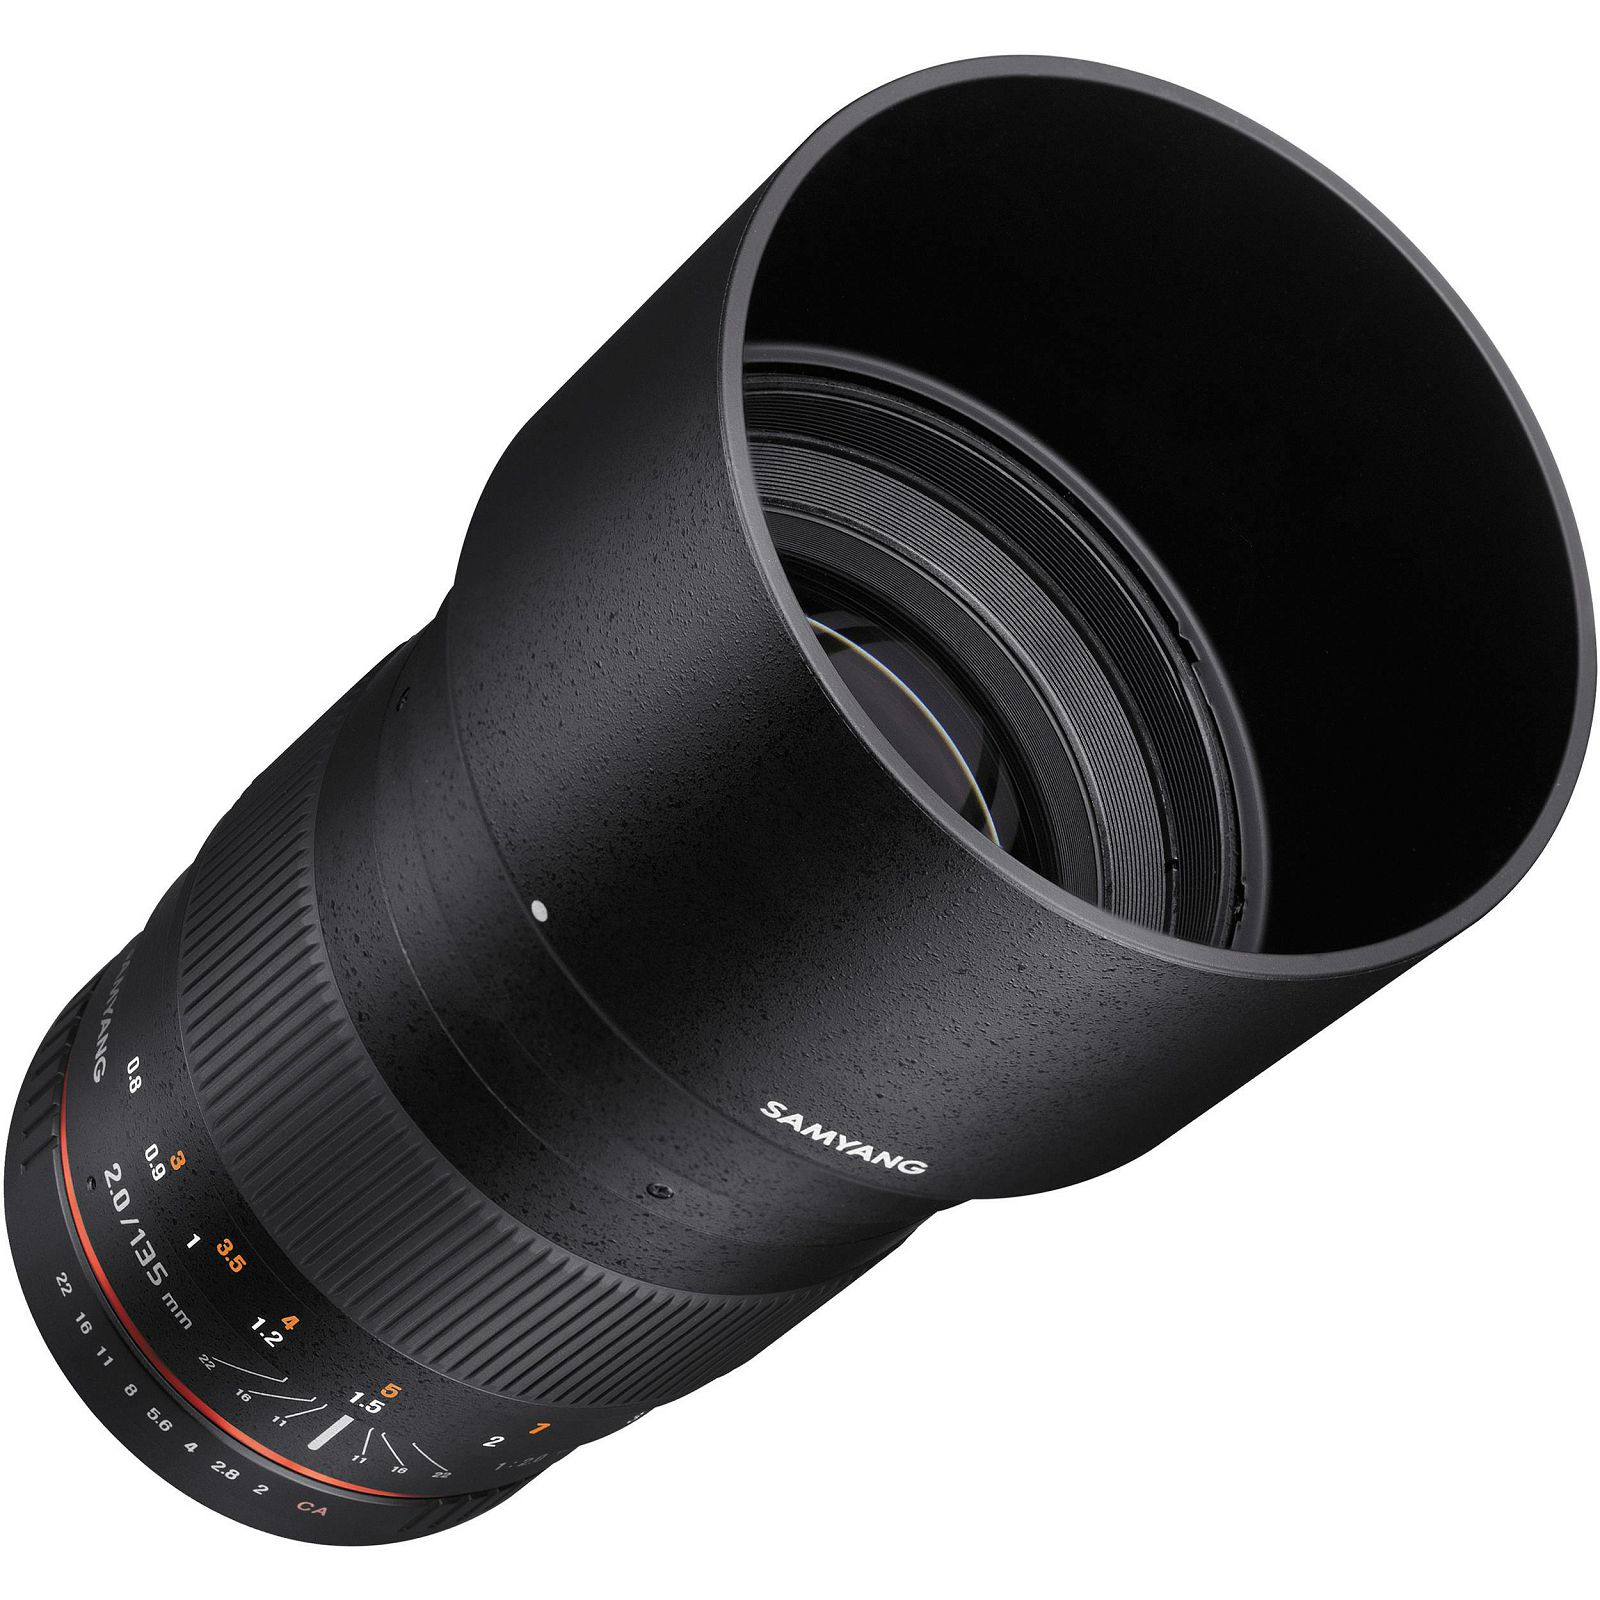 Samyang 135mm f/2 ED UMC portretni telefoto objektiv za Canon EF-M